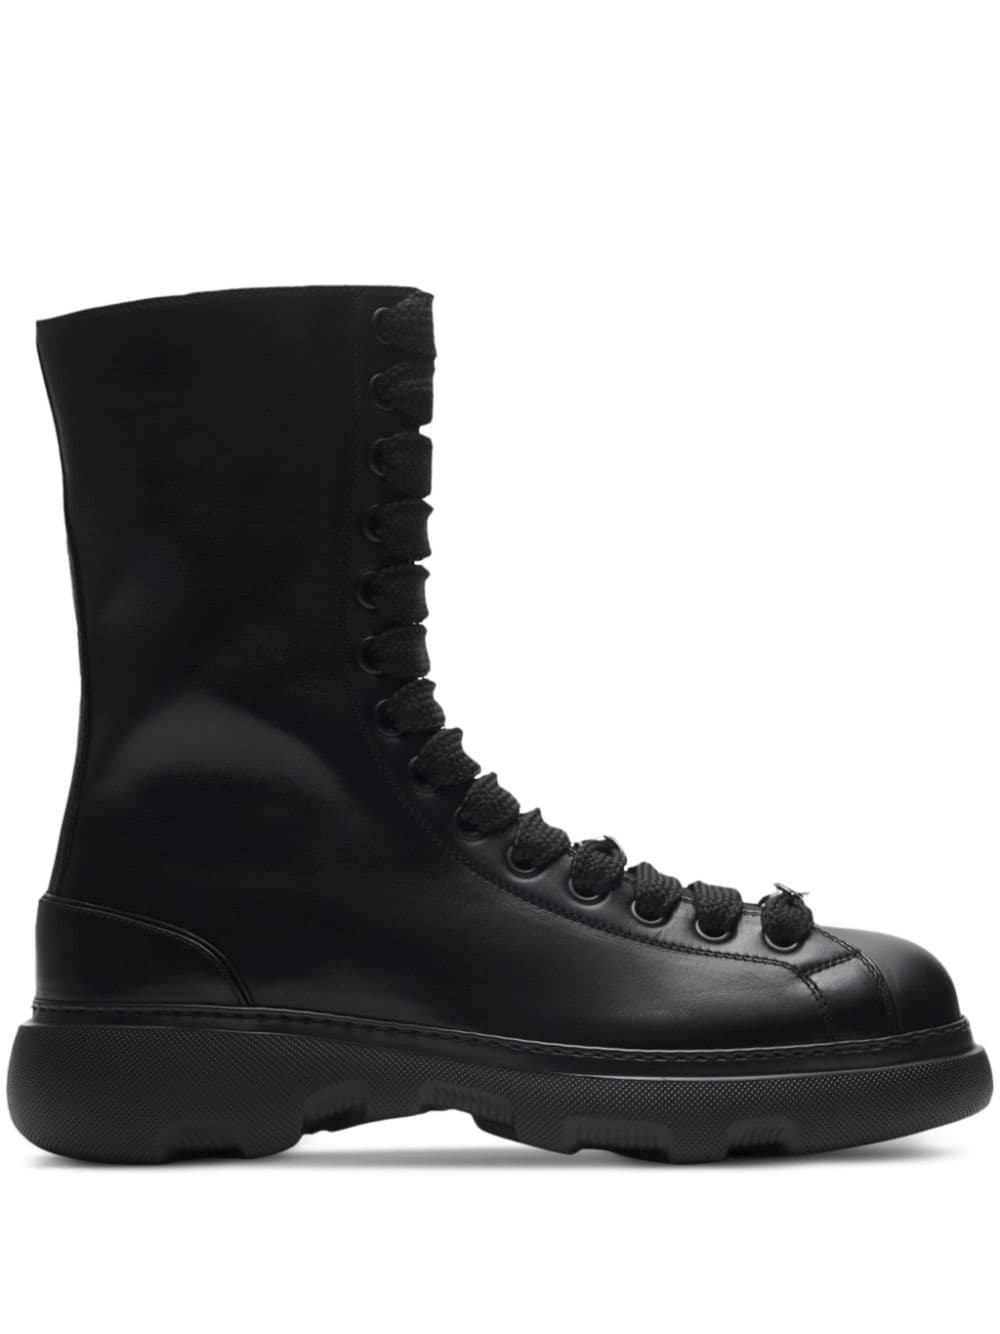 Burberry Ranger leather boots - Black von Burberry